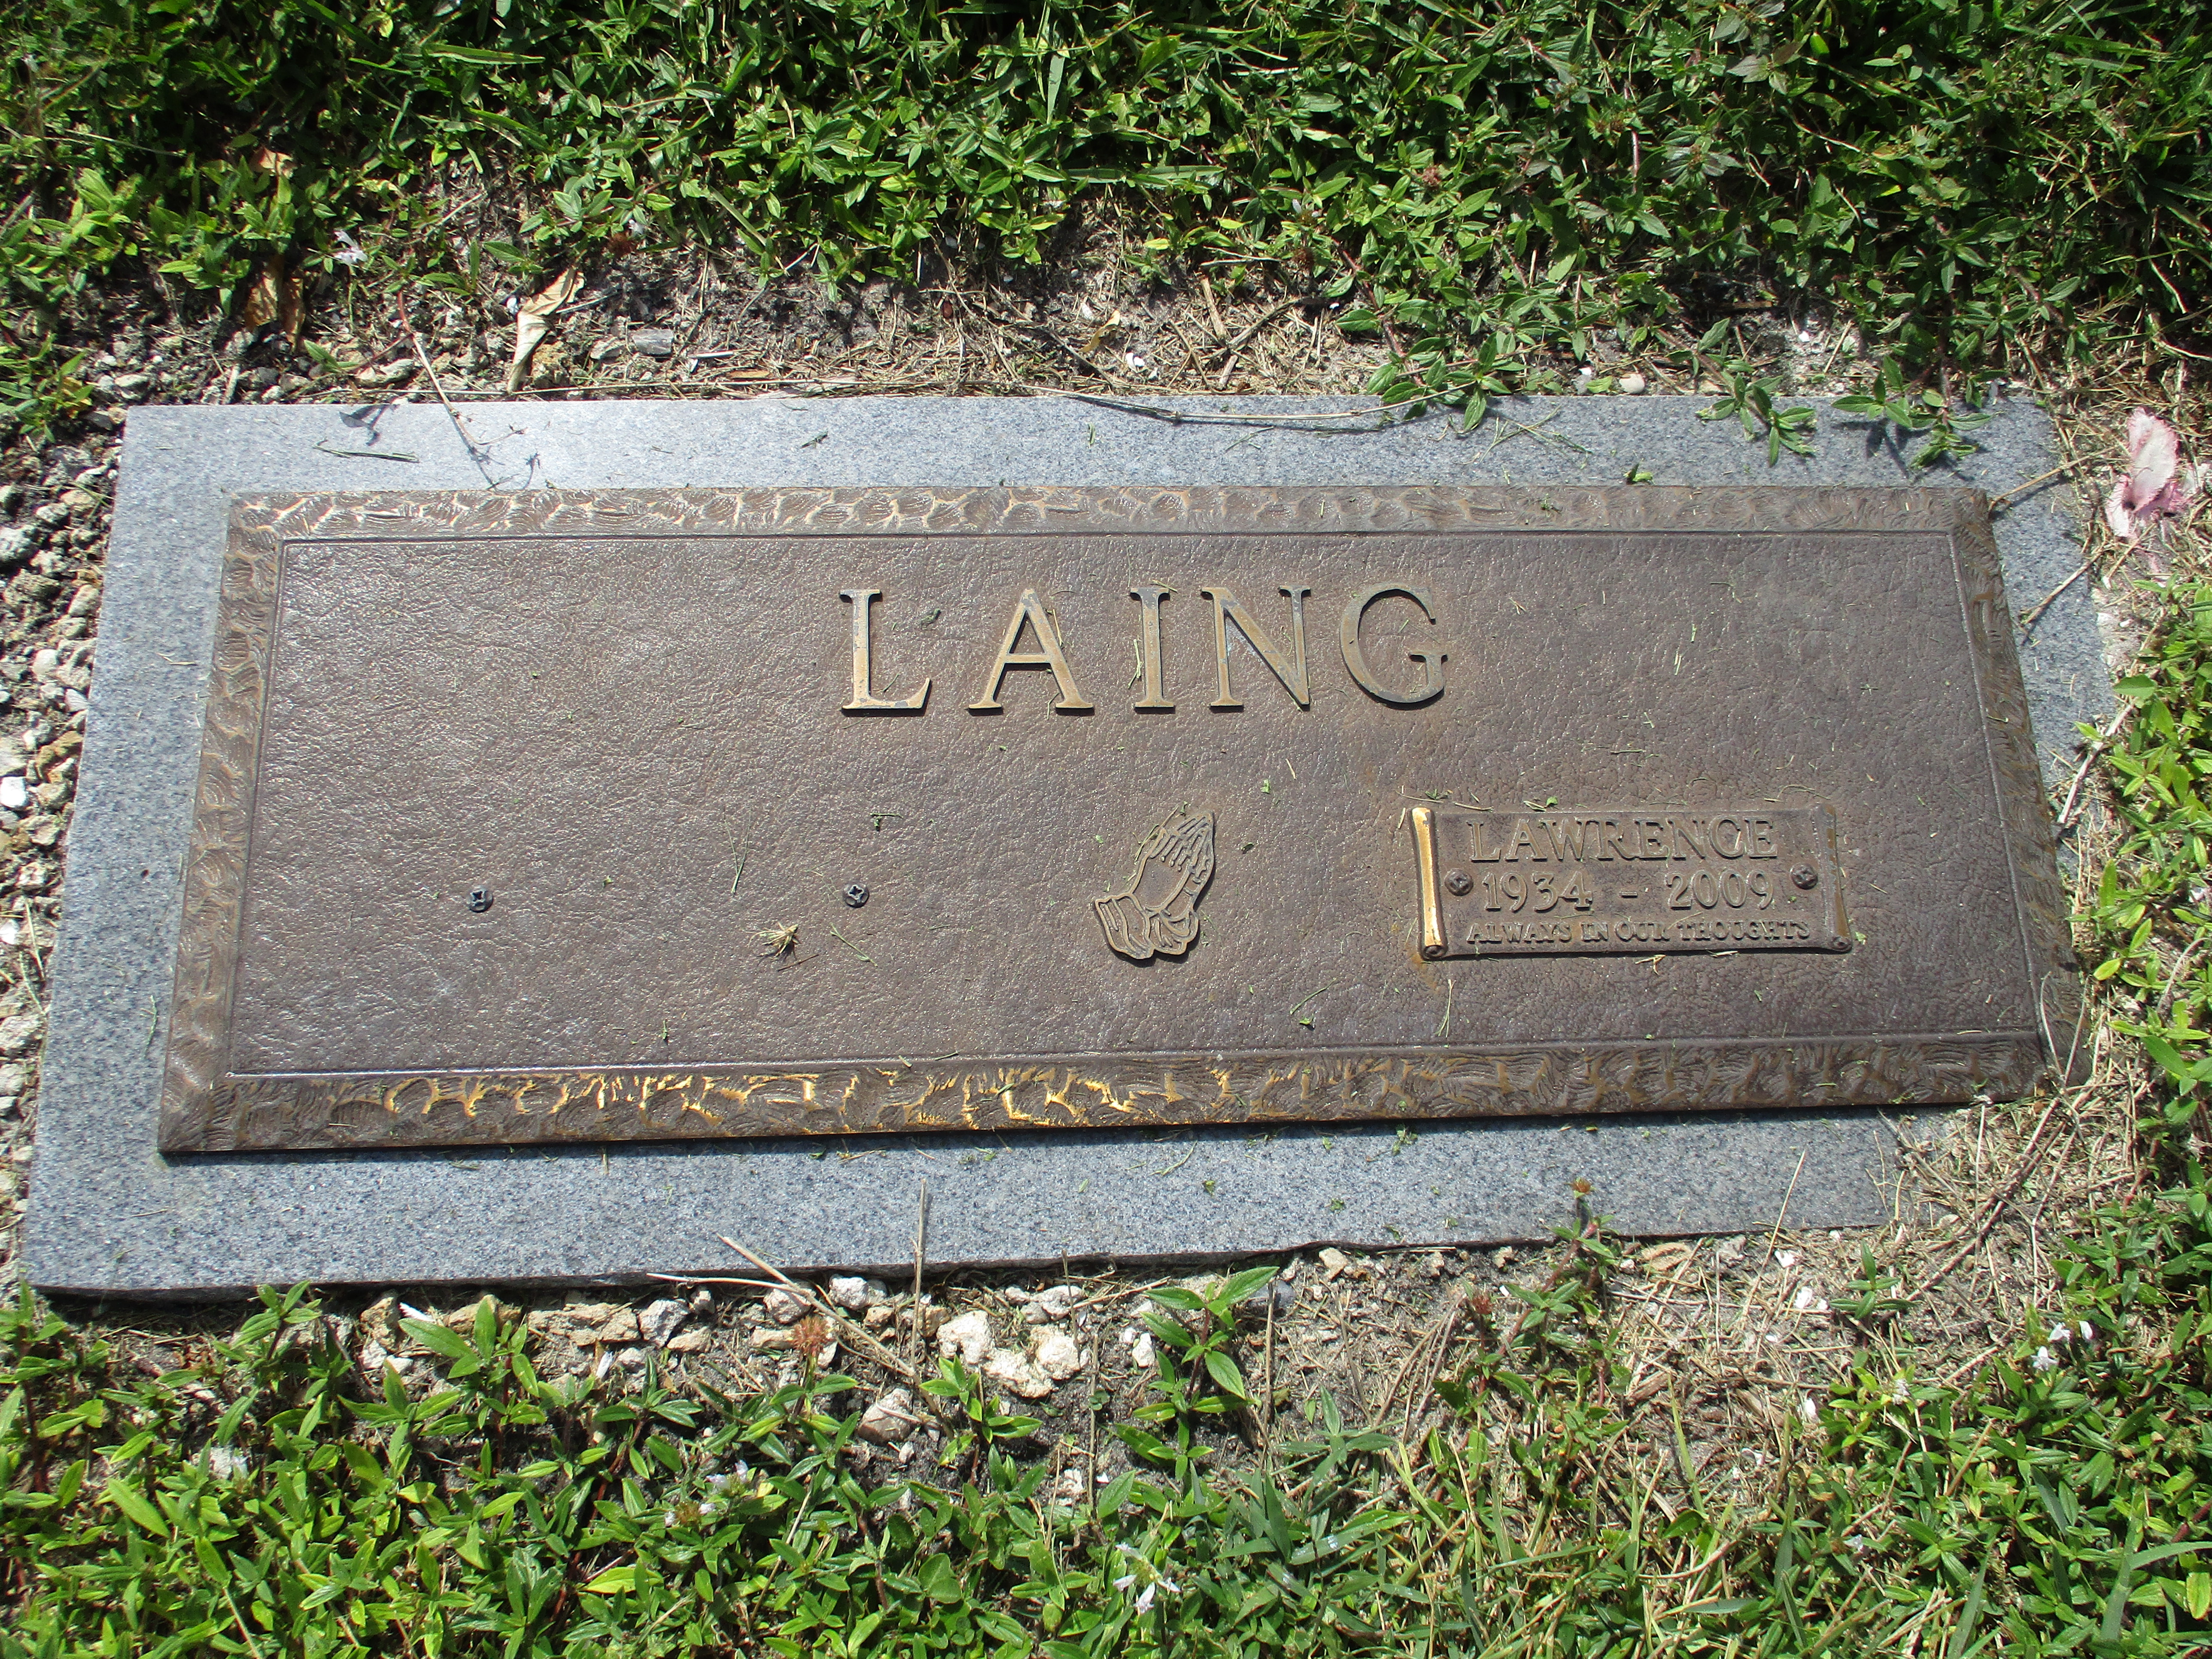 Lawrence Laing